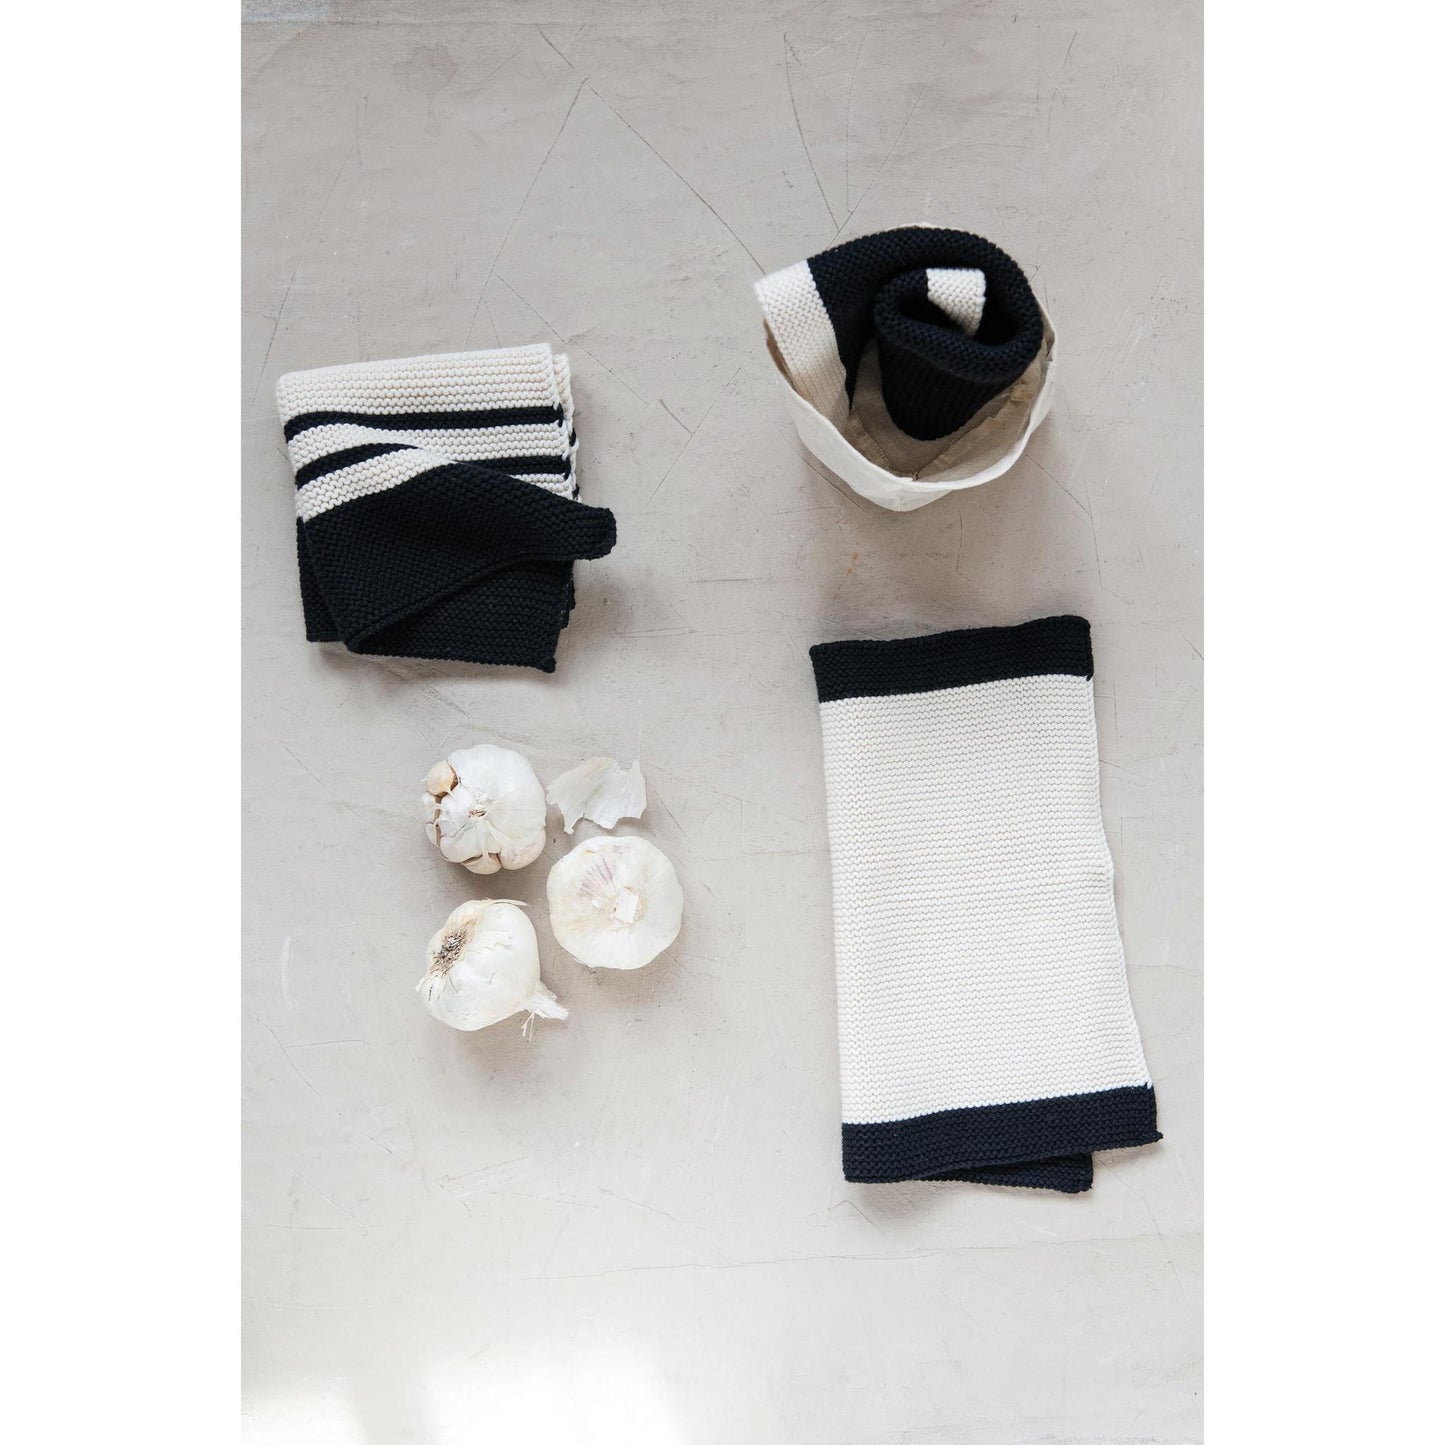 Cotton Knit Striped Dish Cloth Set